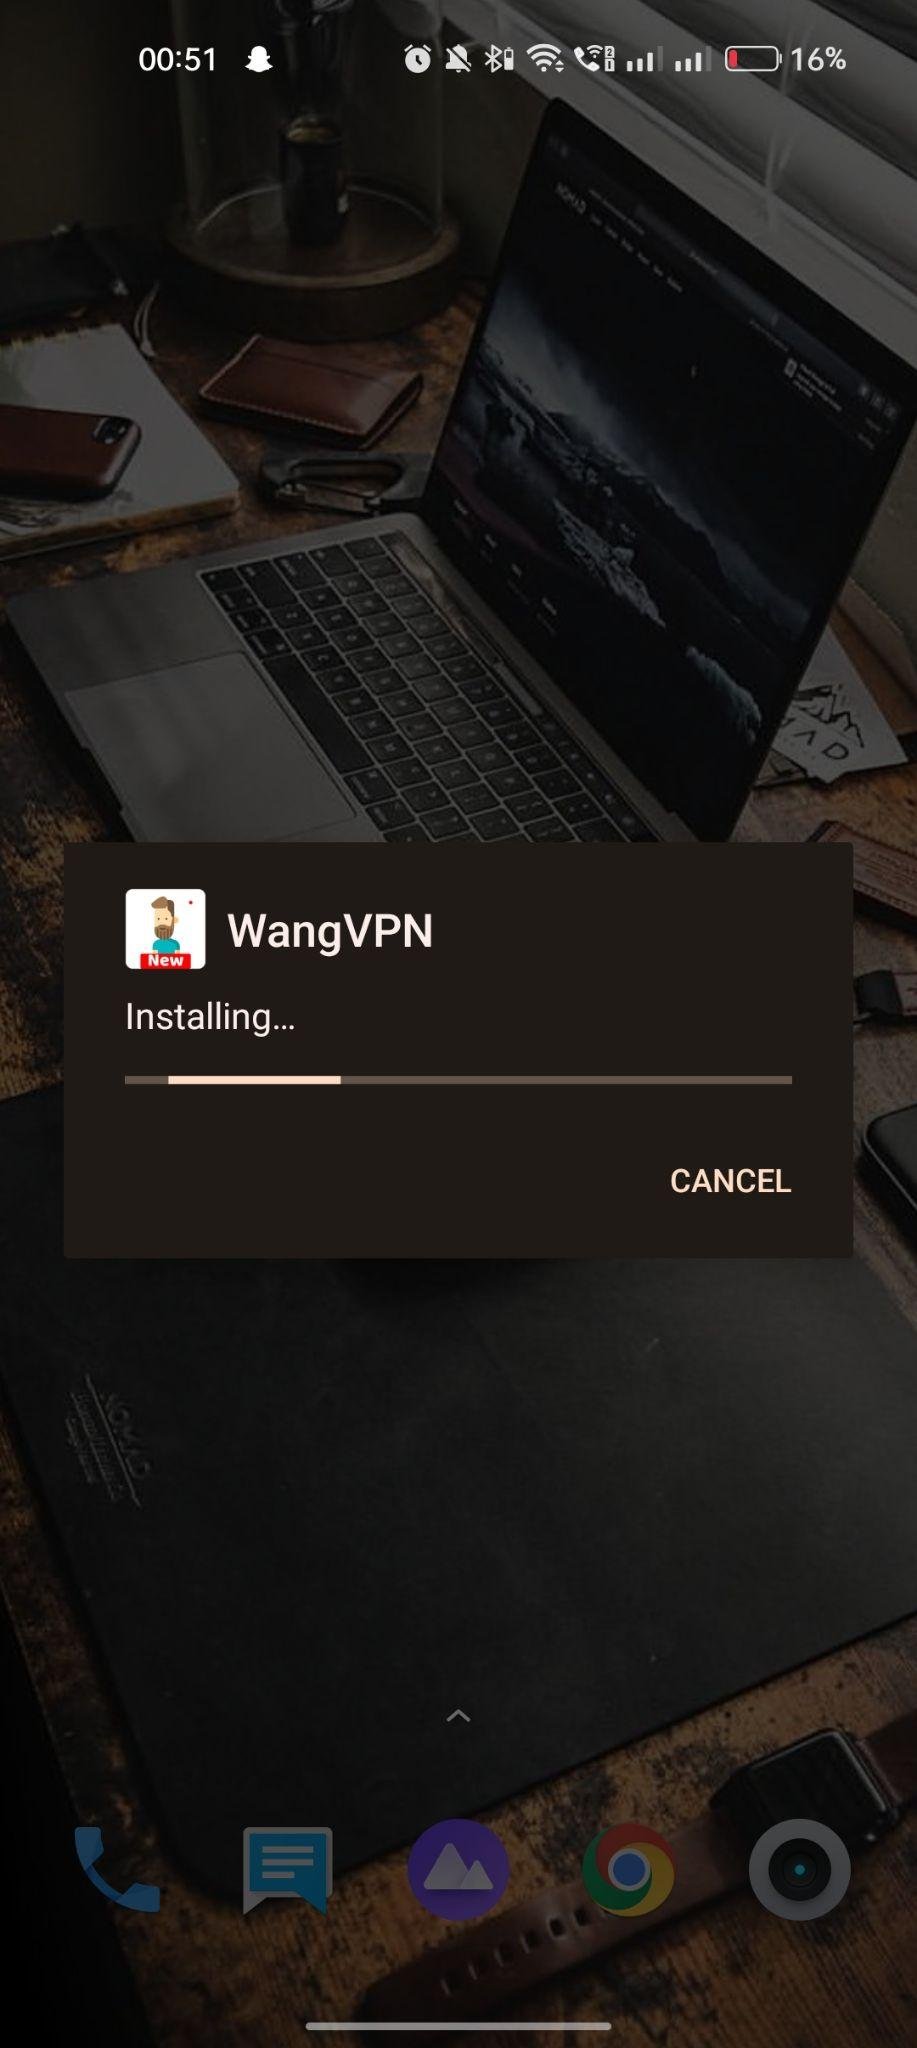 Wang VPN apk installing